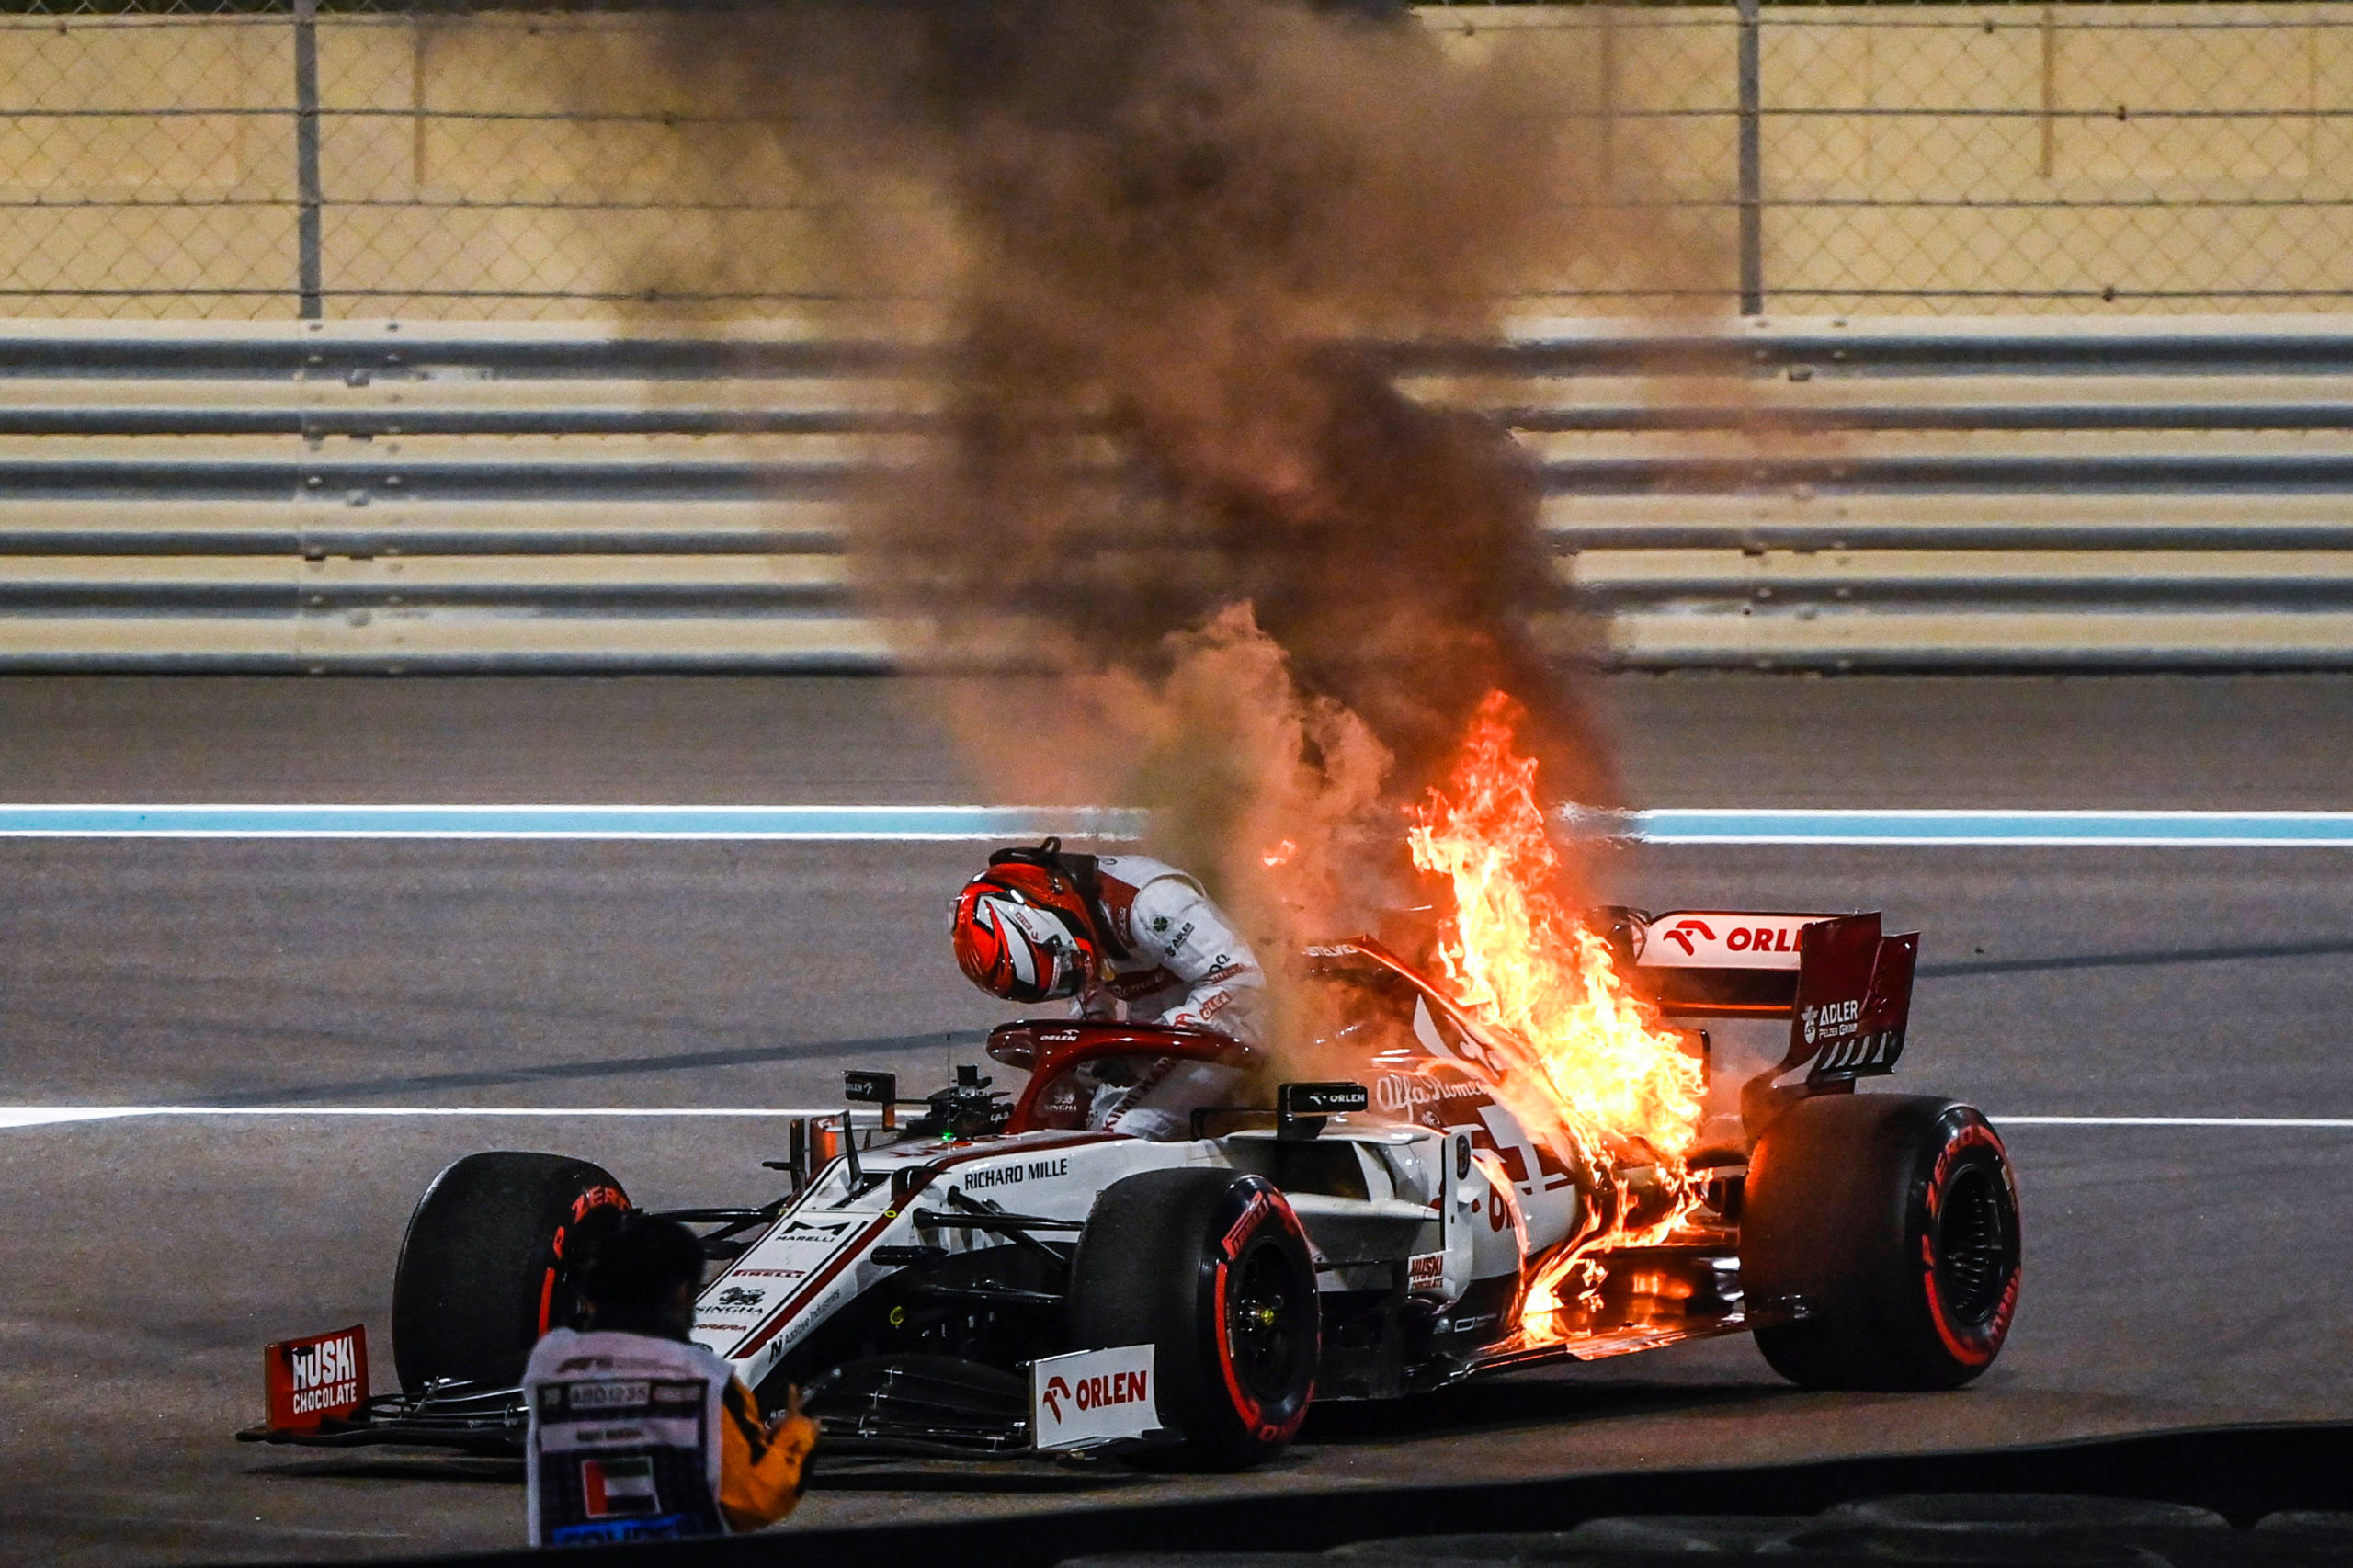 'Ice-cool' Kimi Raikkonen ends his FP2 literally on fire